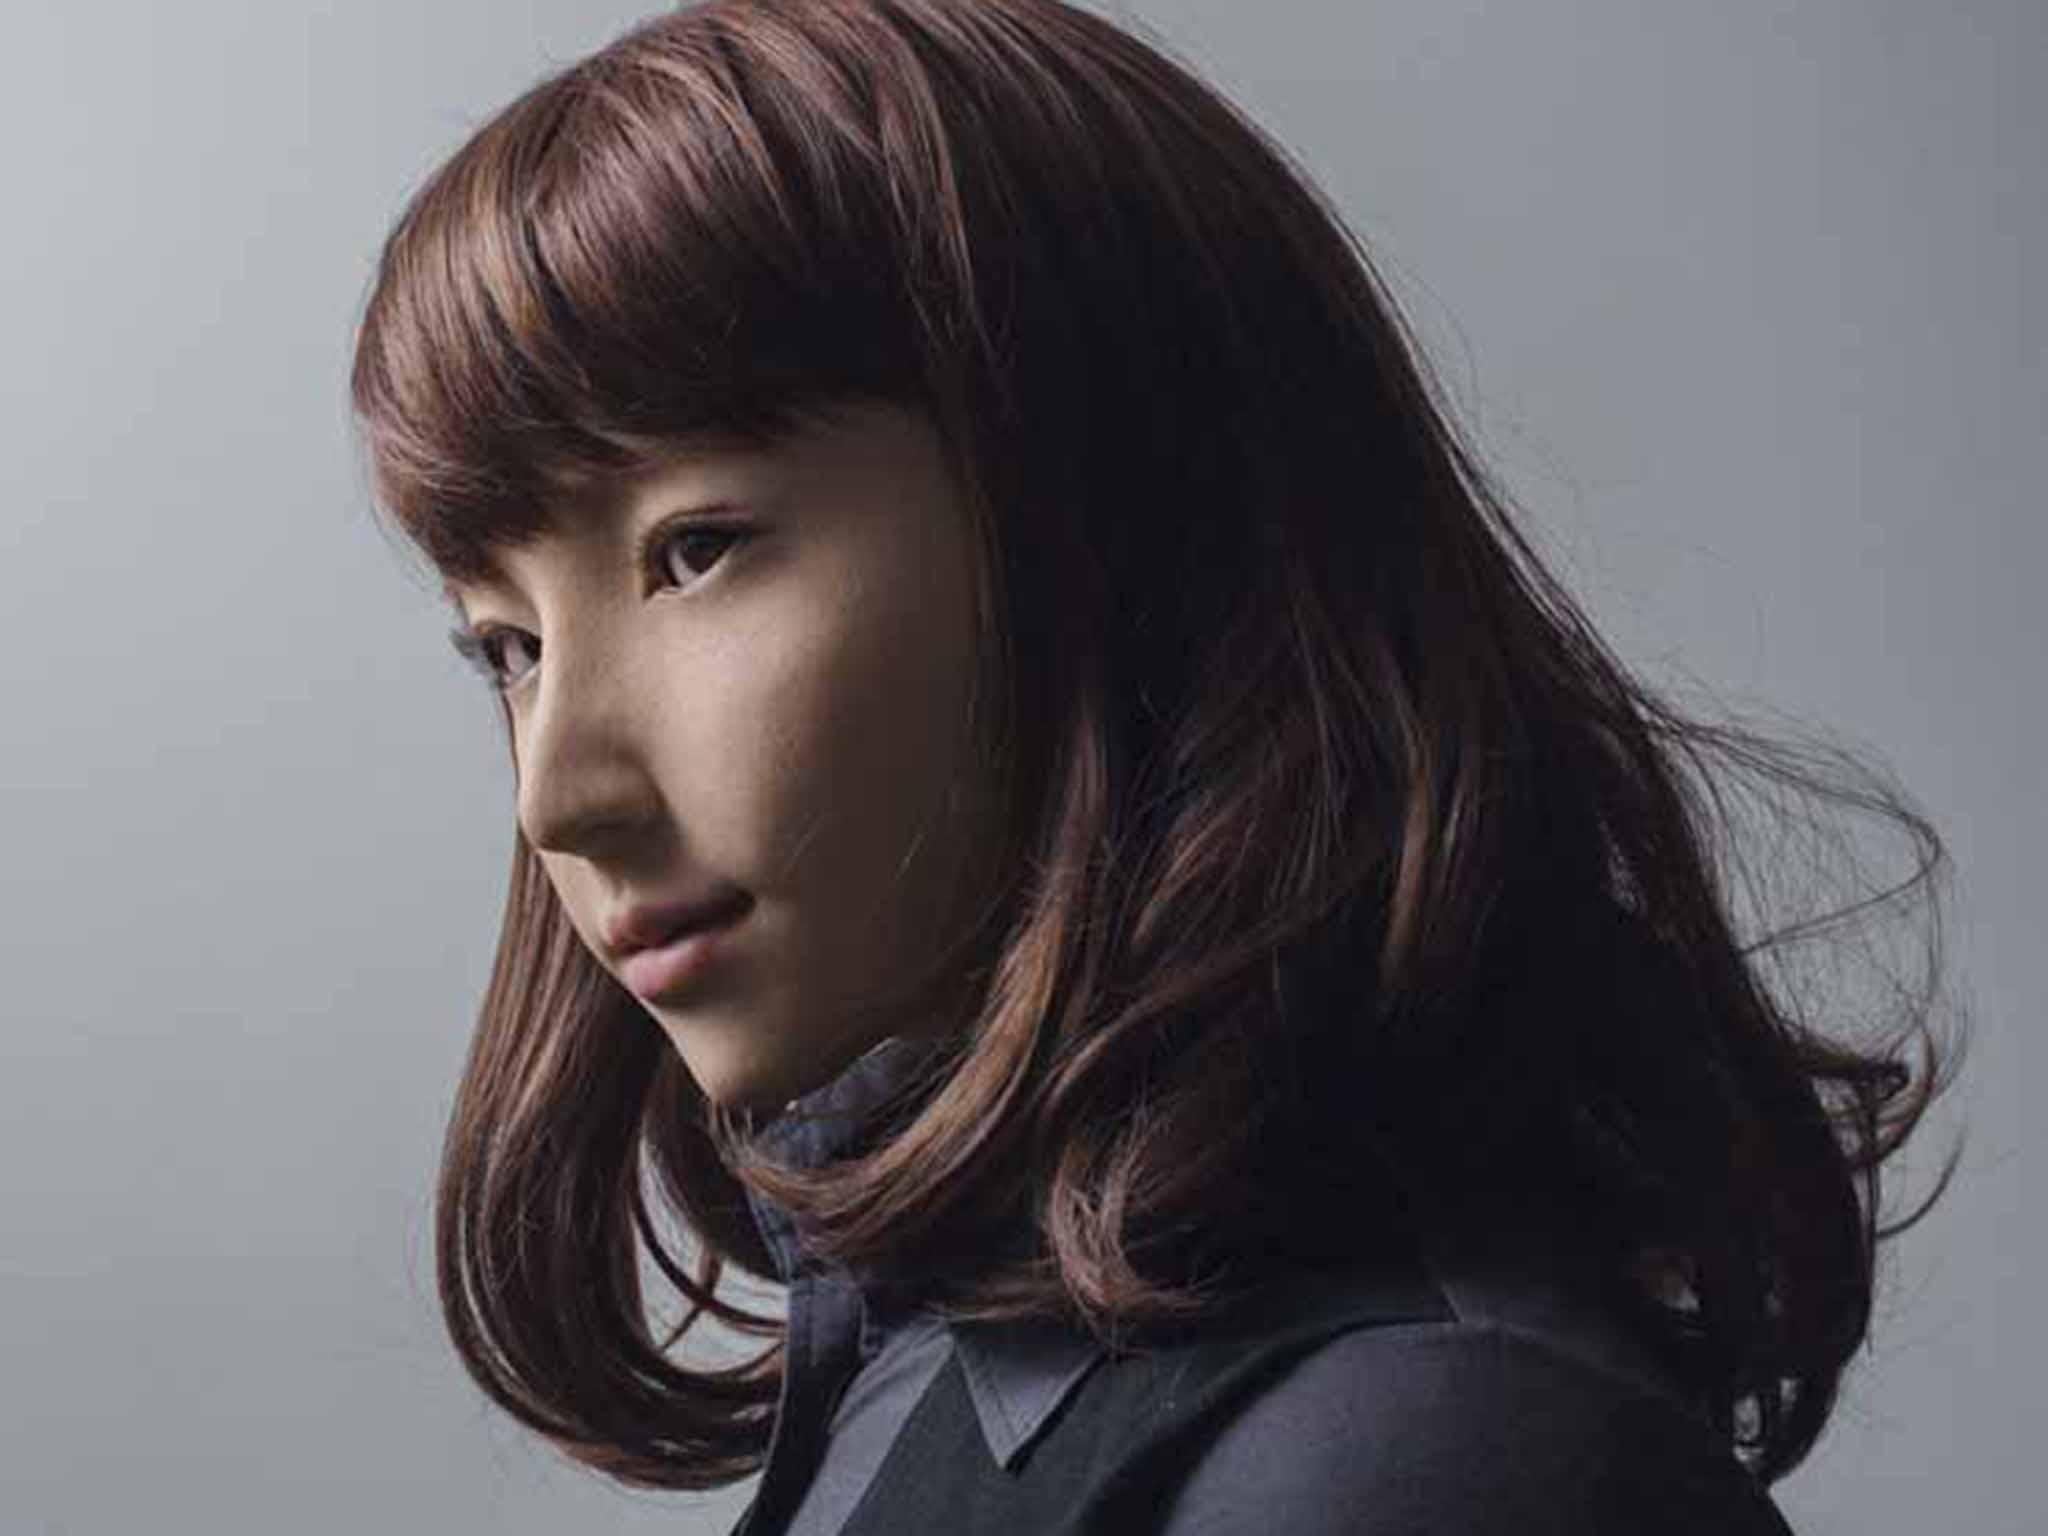 Tammi’s photograph portrays Erica, an android from Hiroshi Ishiguro Laboratories